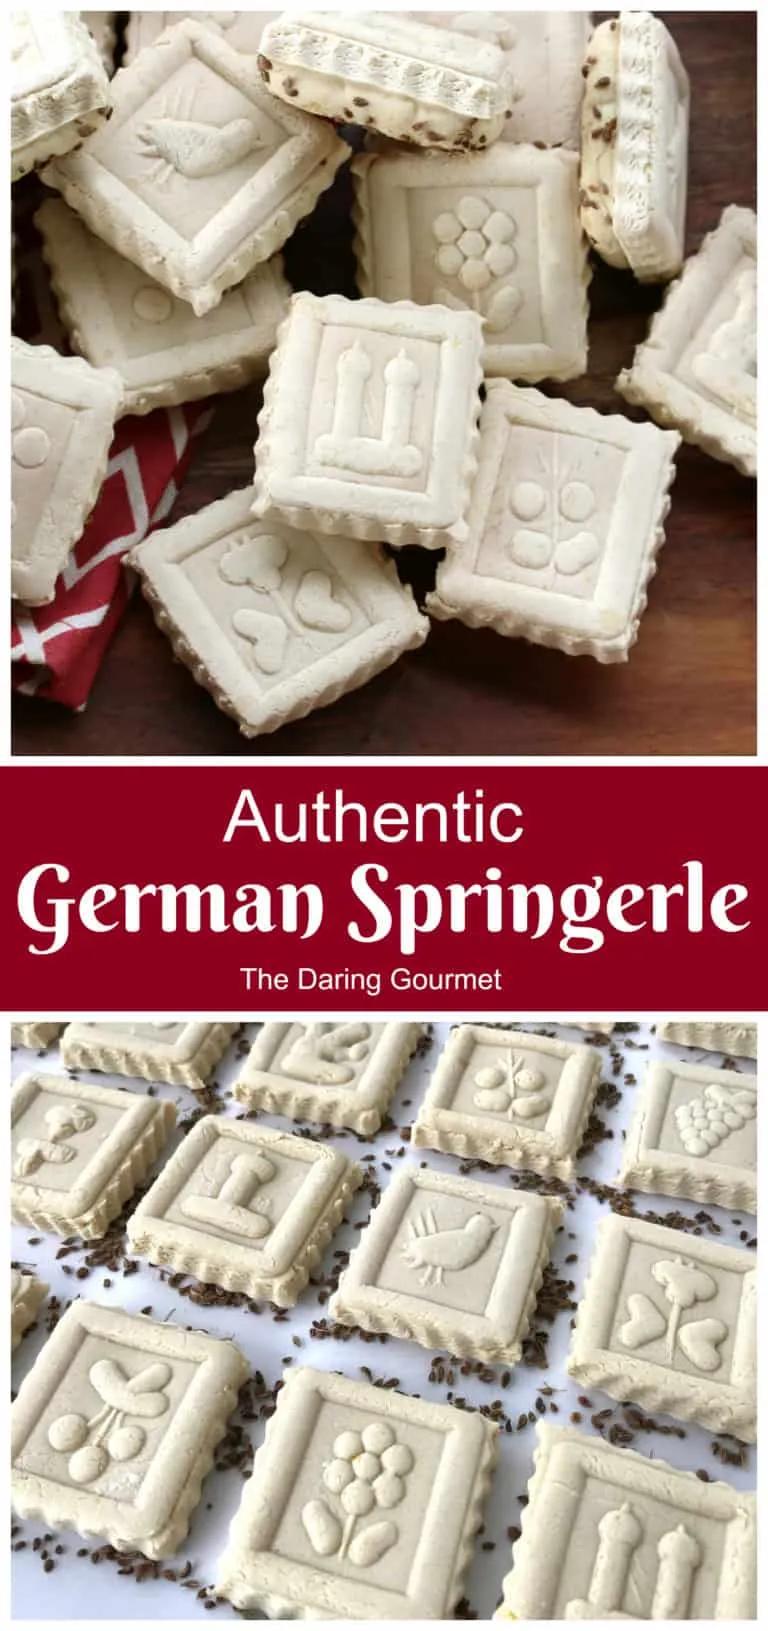 Authentic German Springerle - The Daring Gourmet